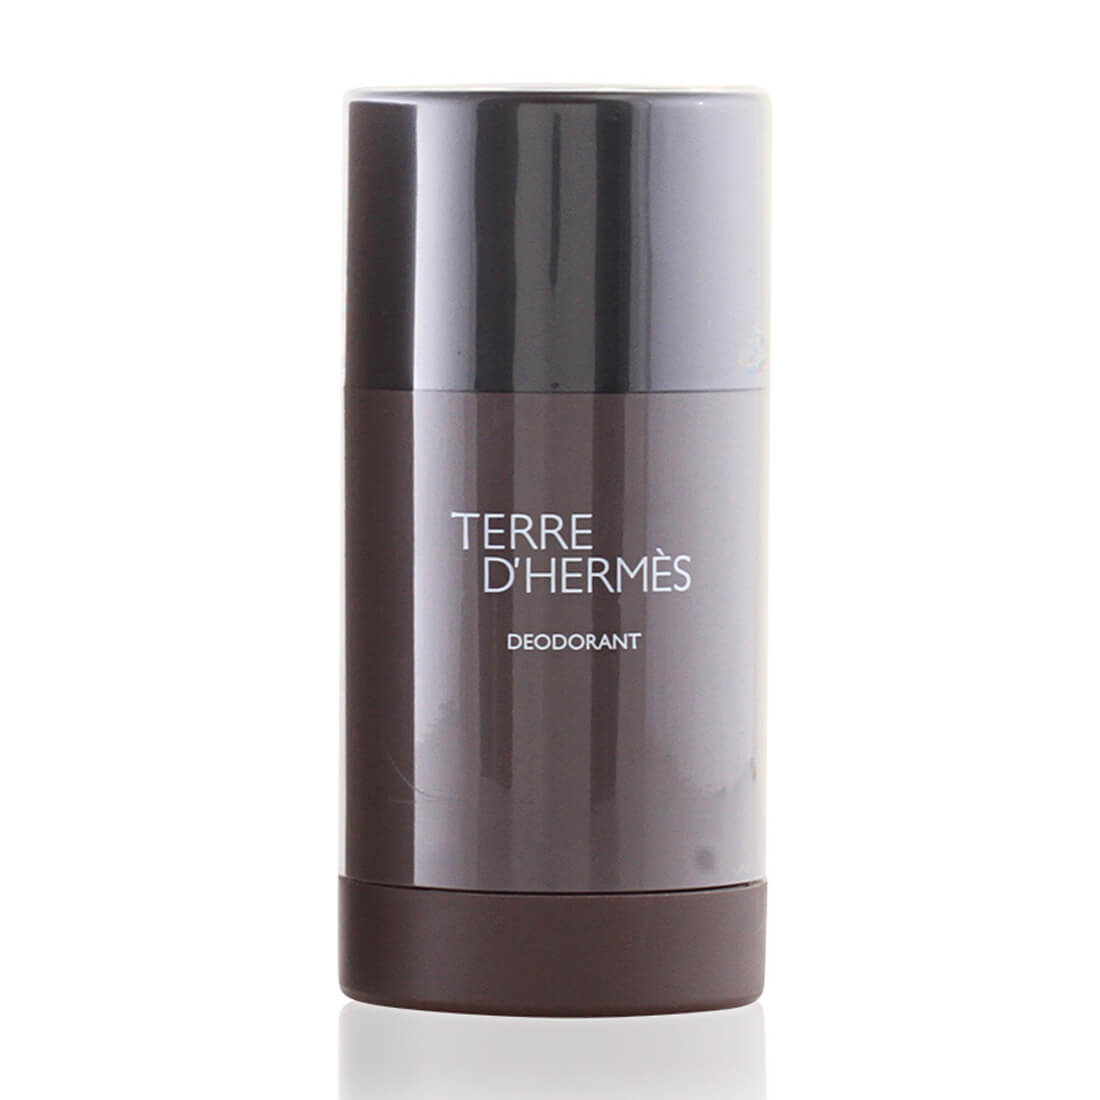 Hermes Terre D’Hermes Deodorant Stick 75ml